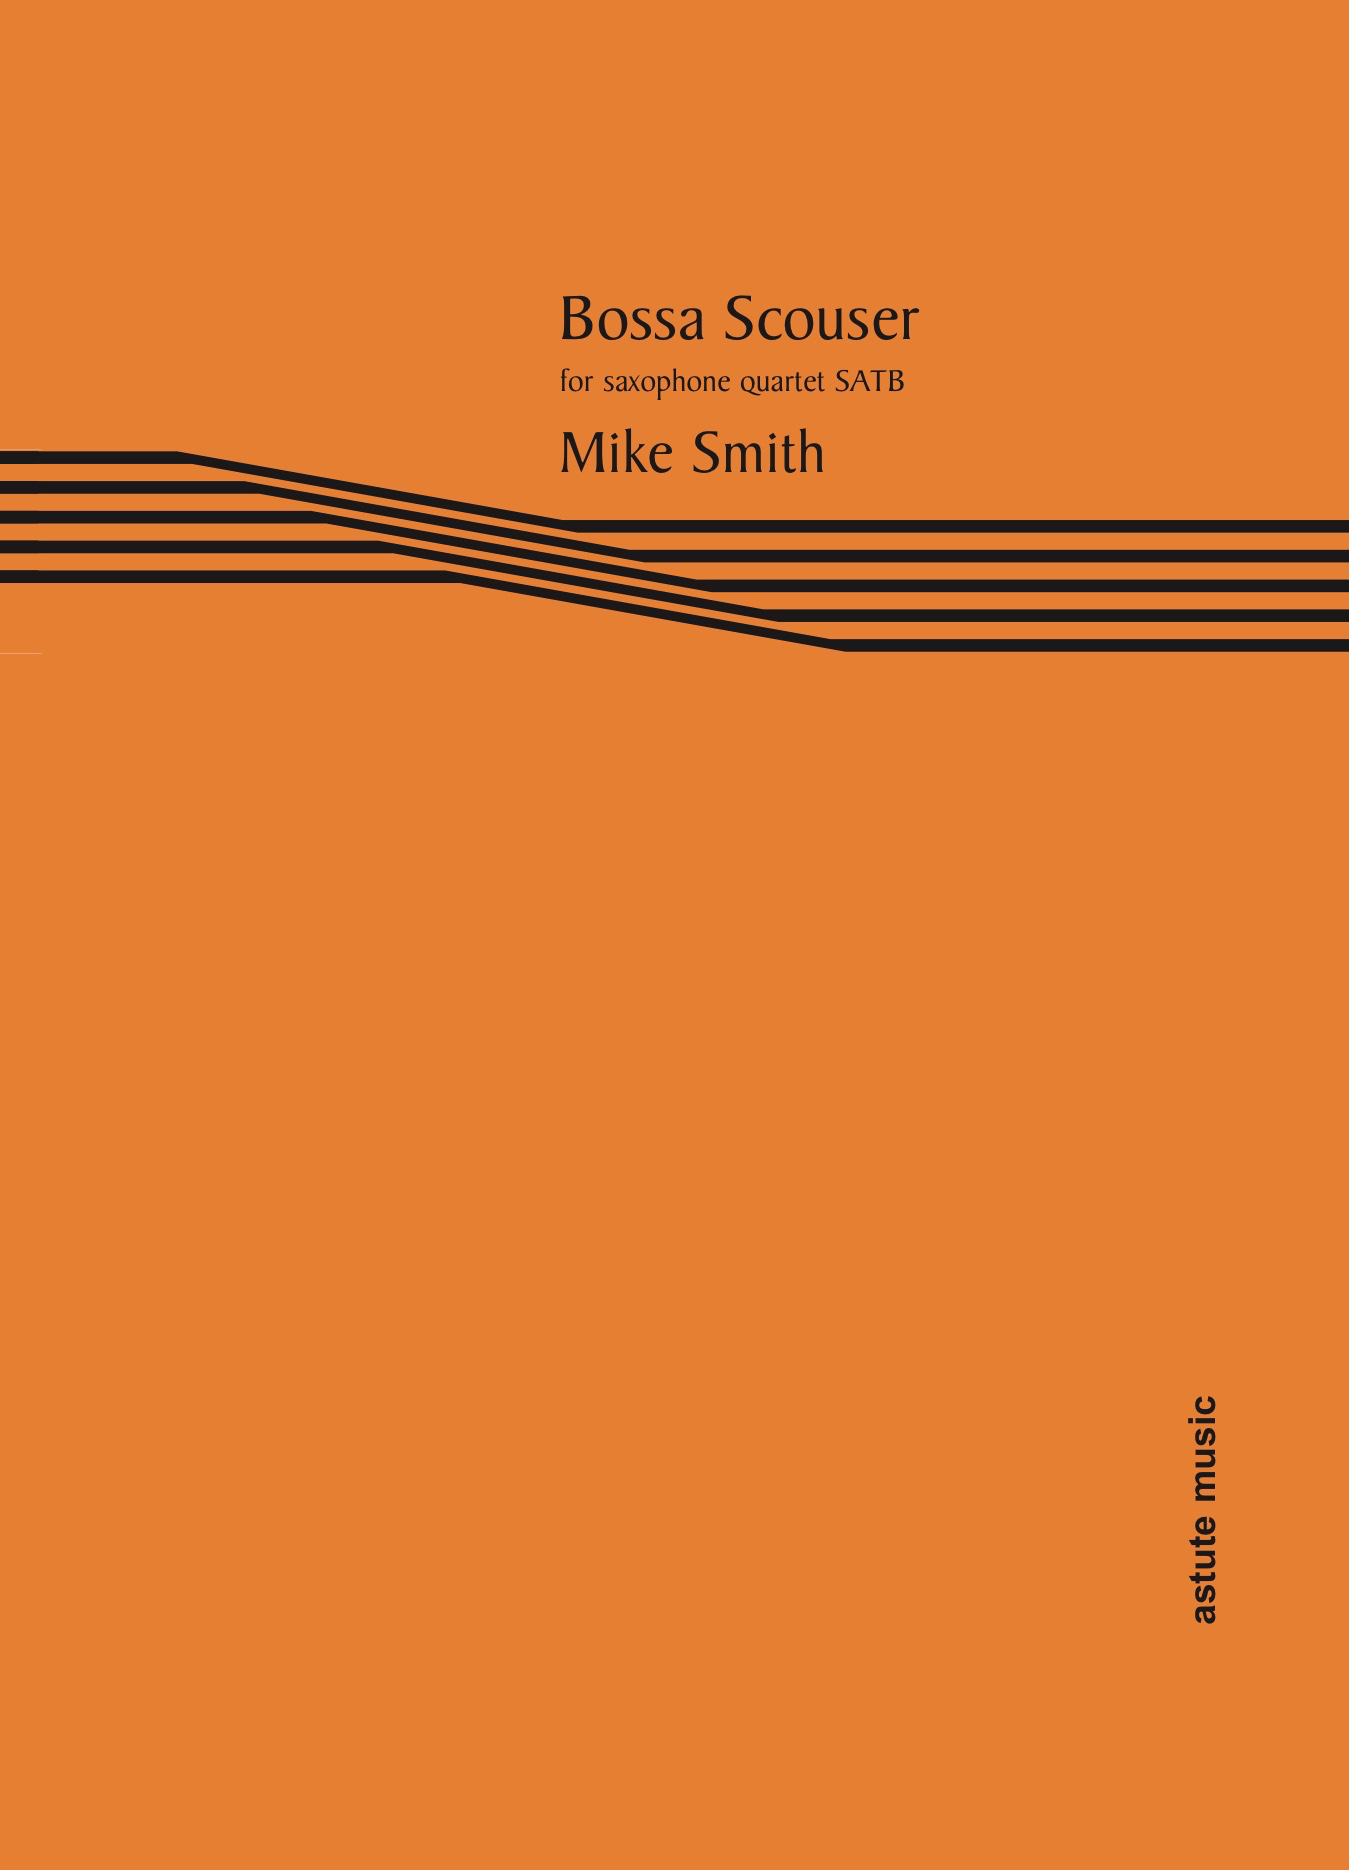 Smith Bossa Scouser Saxophone Quartet Satb Sheet Music Songbook